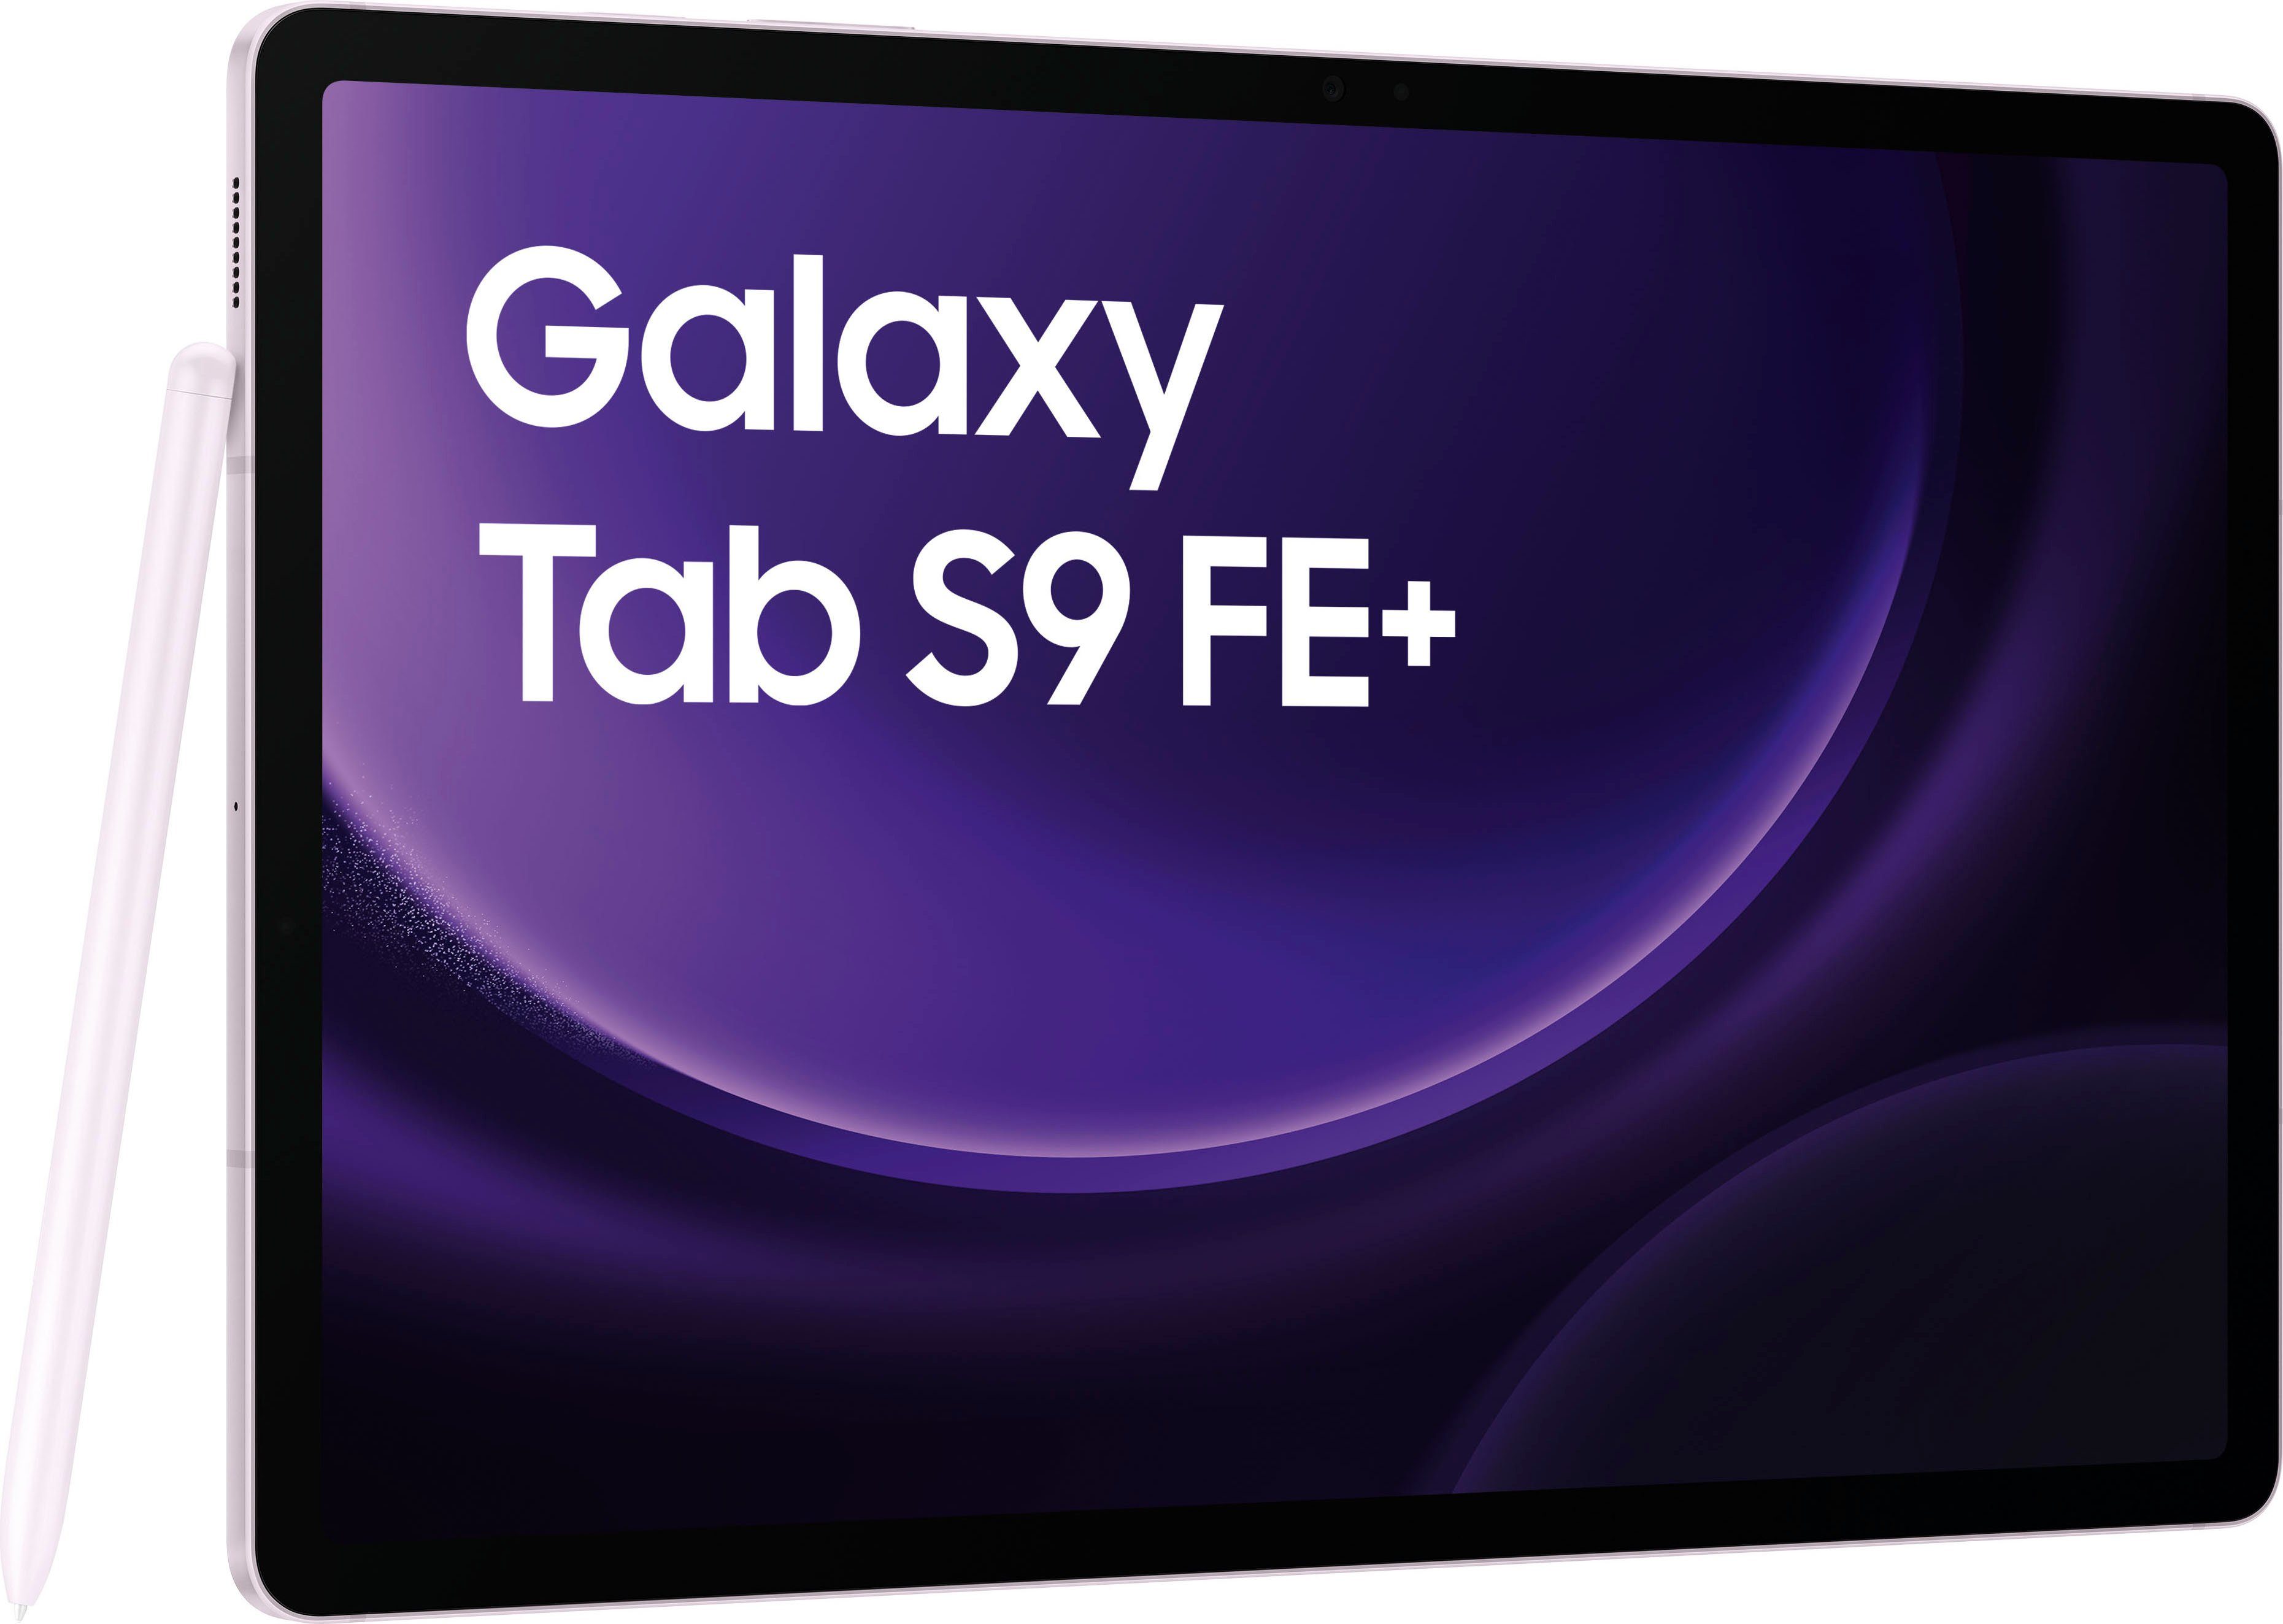 Android,One (12,4", Galaxy lavender S9 Tab FE+ 128 GB, Samsung UI,Knox) Tablet